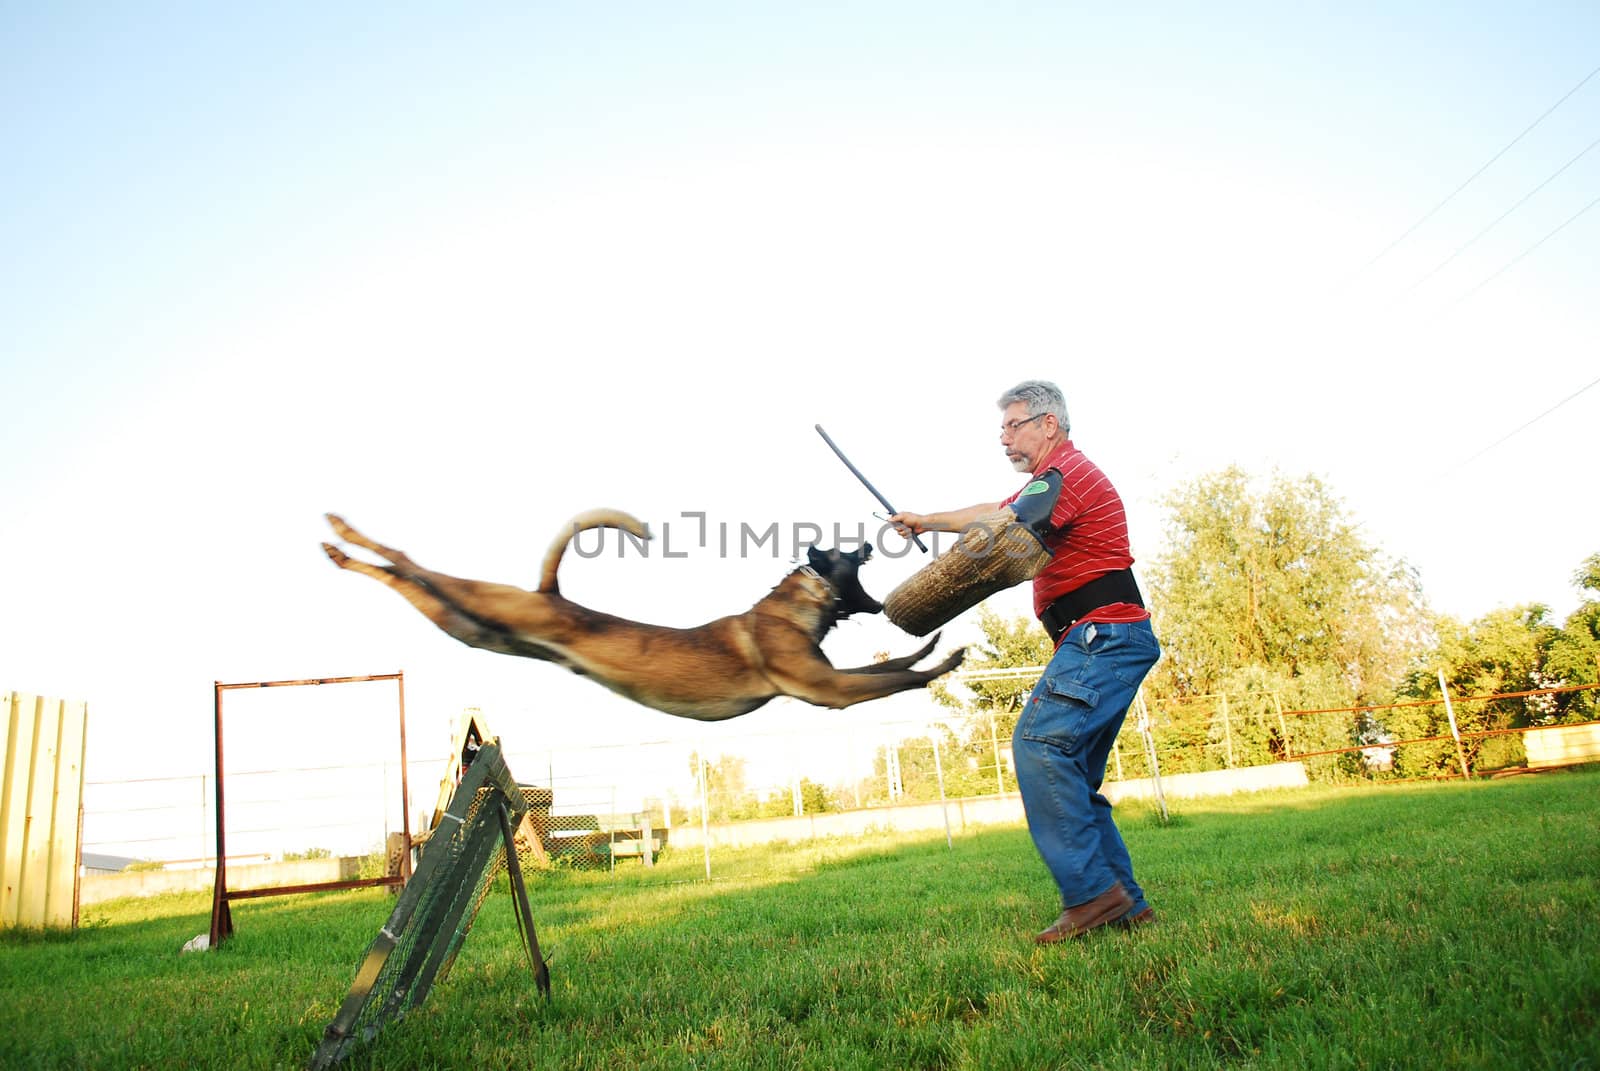 belgian shepherd attack by tony4urban